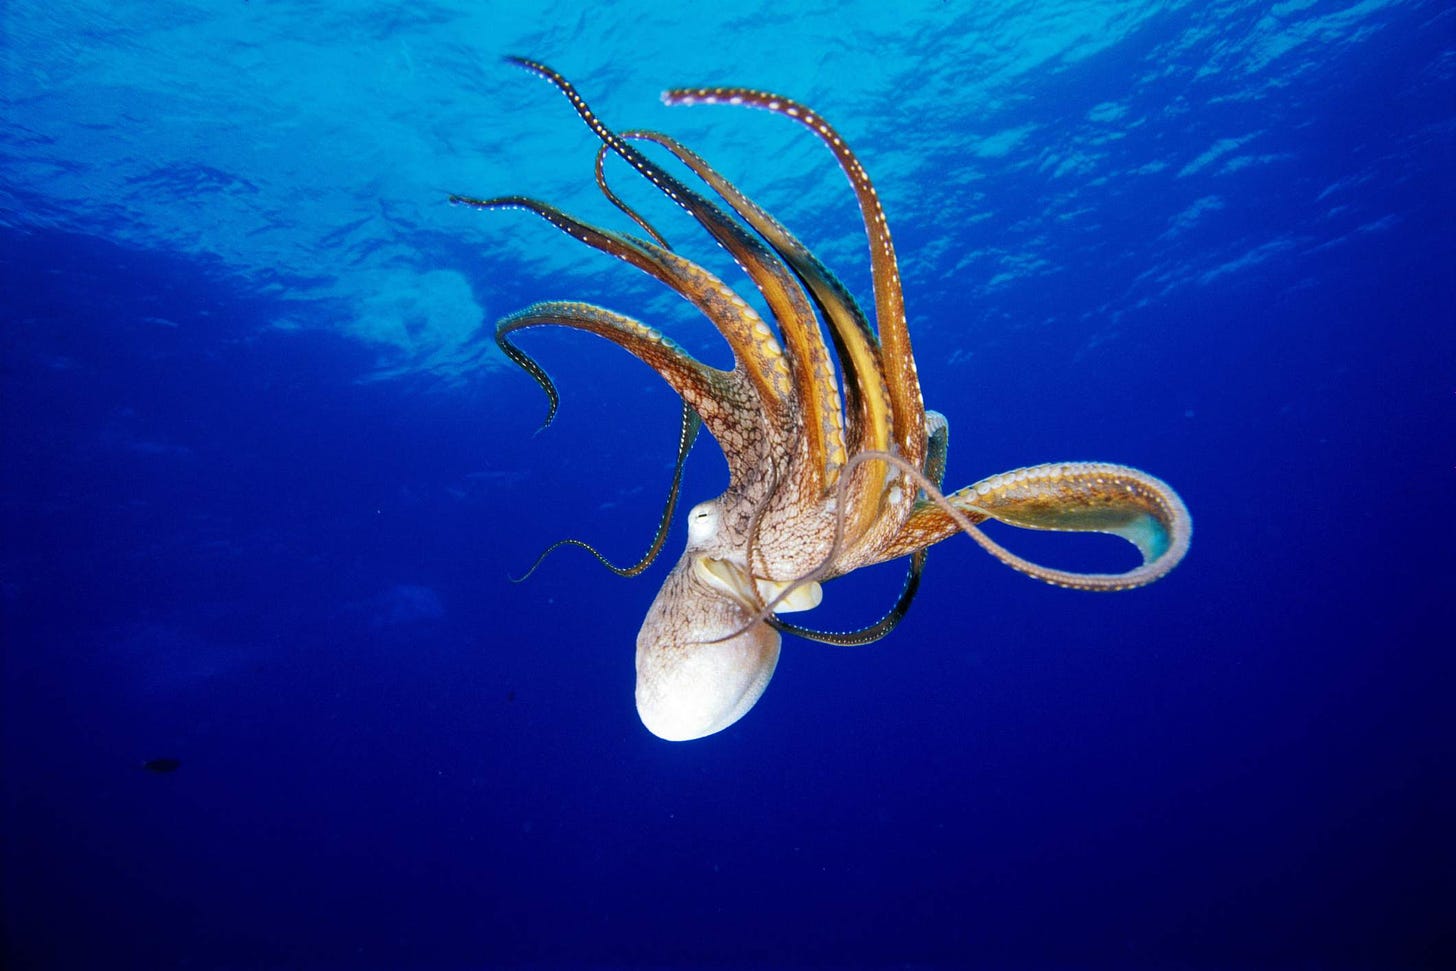 Octopus Facts: Habitat, Behavior, Diet